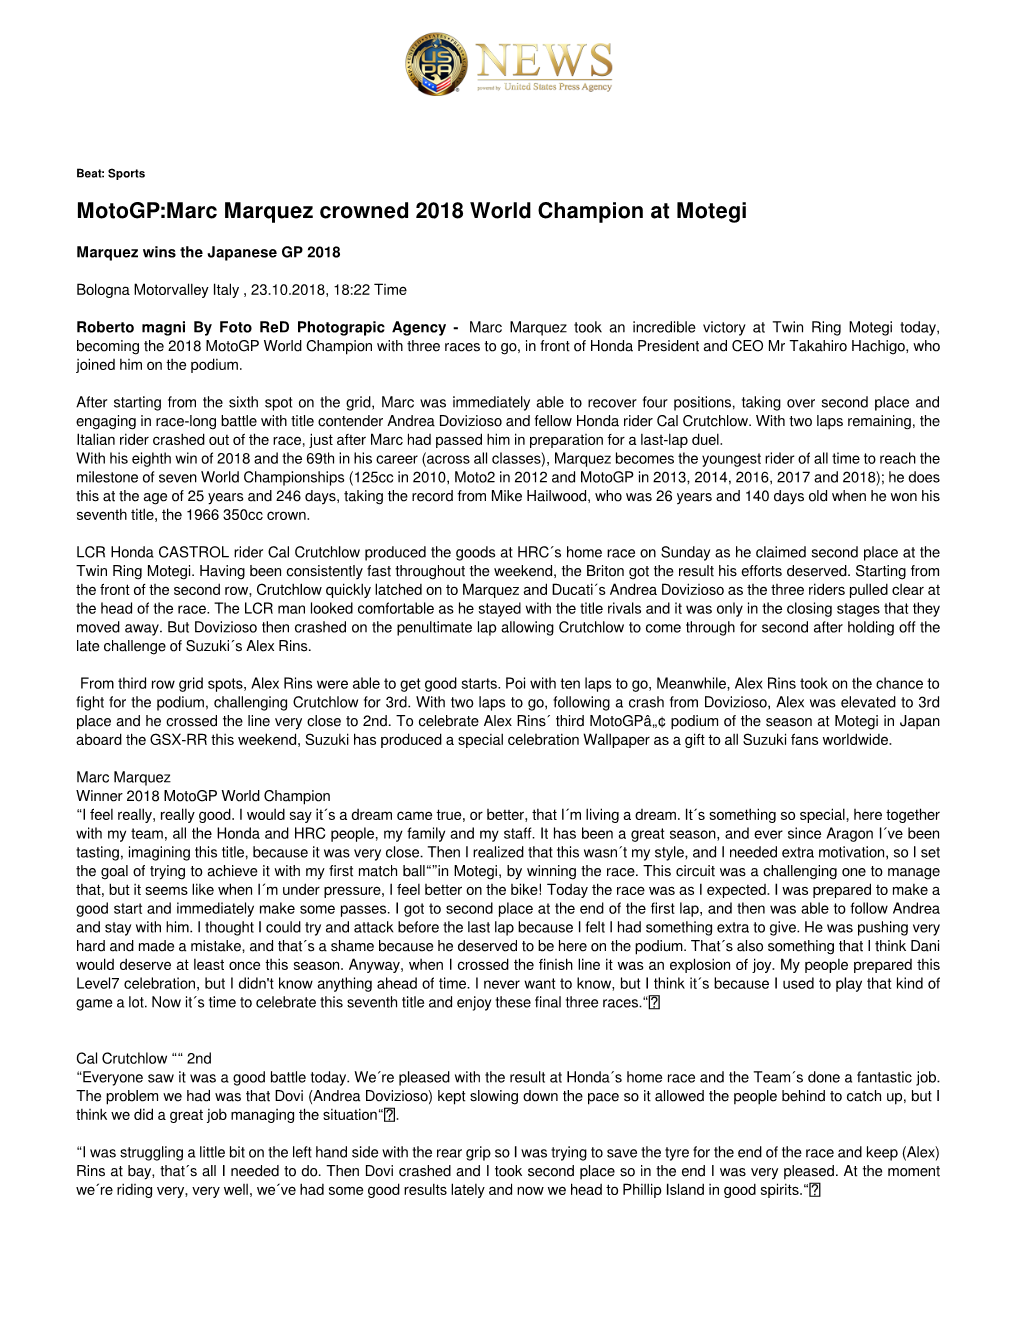 Motogp:Marc Marquez Crowned 2018 World Champion at Motegi